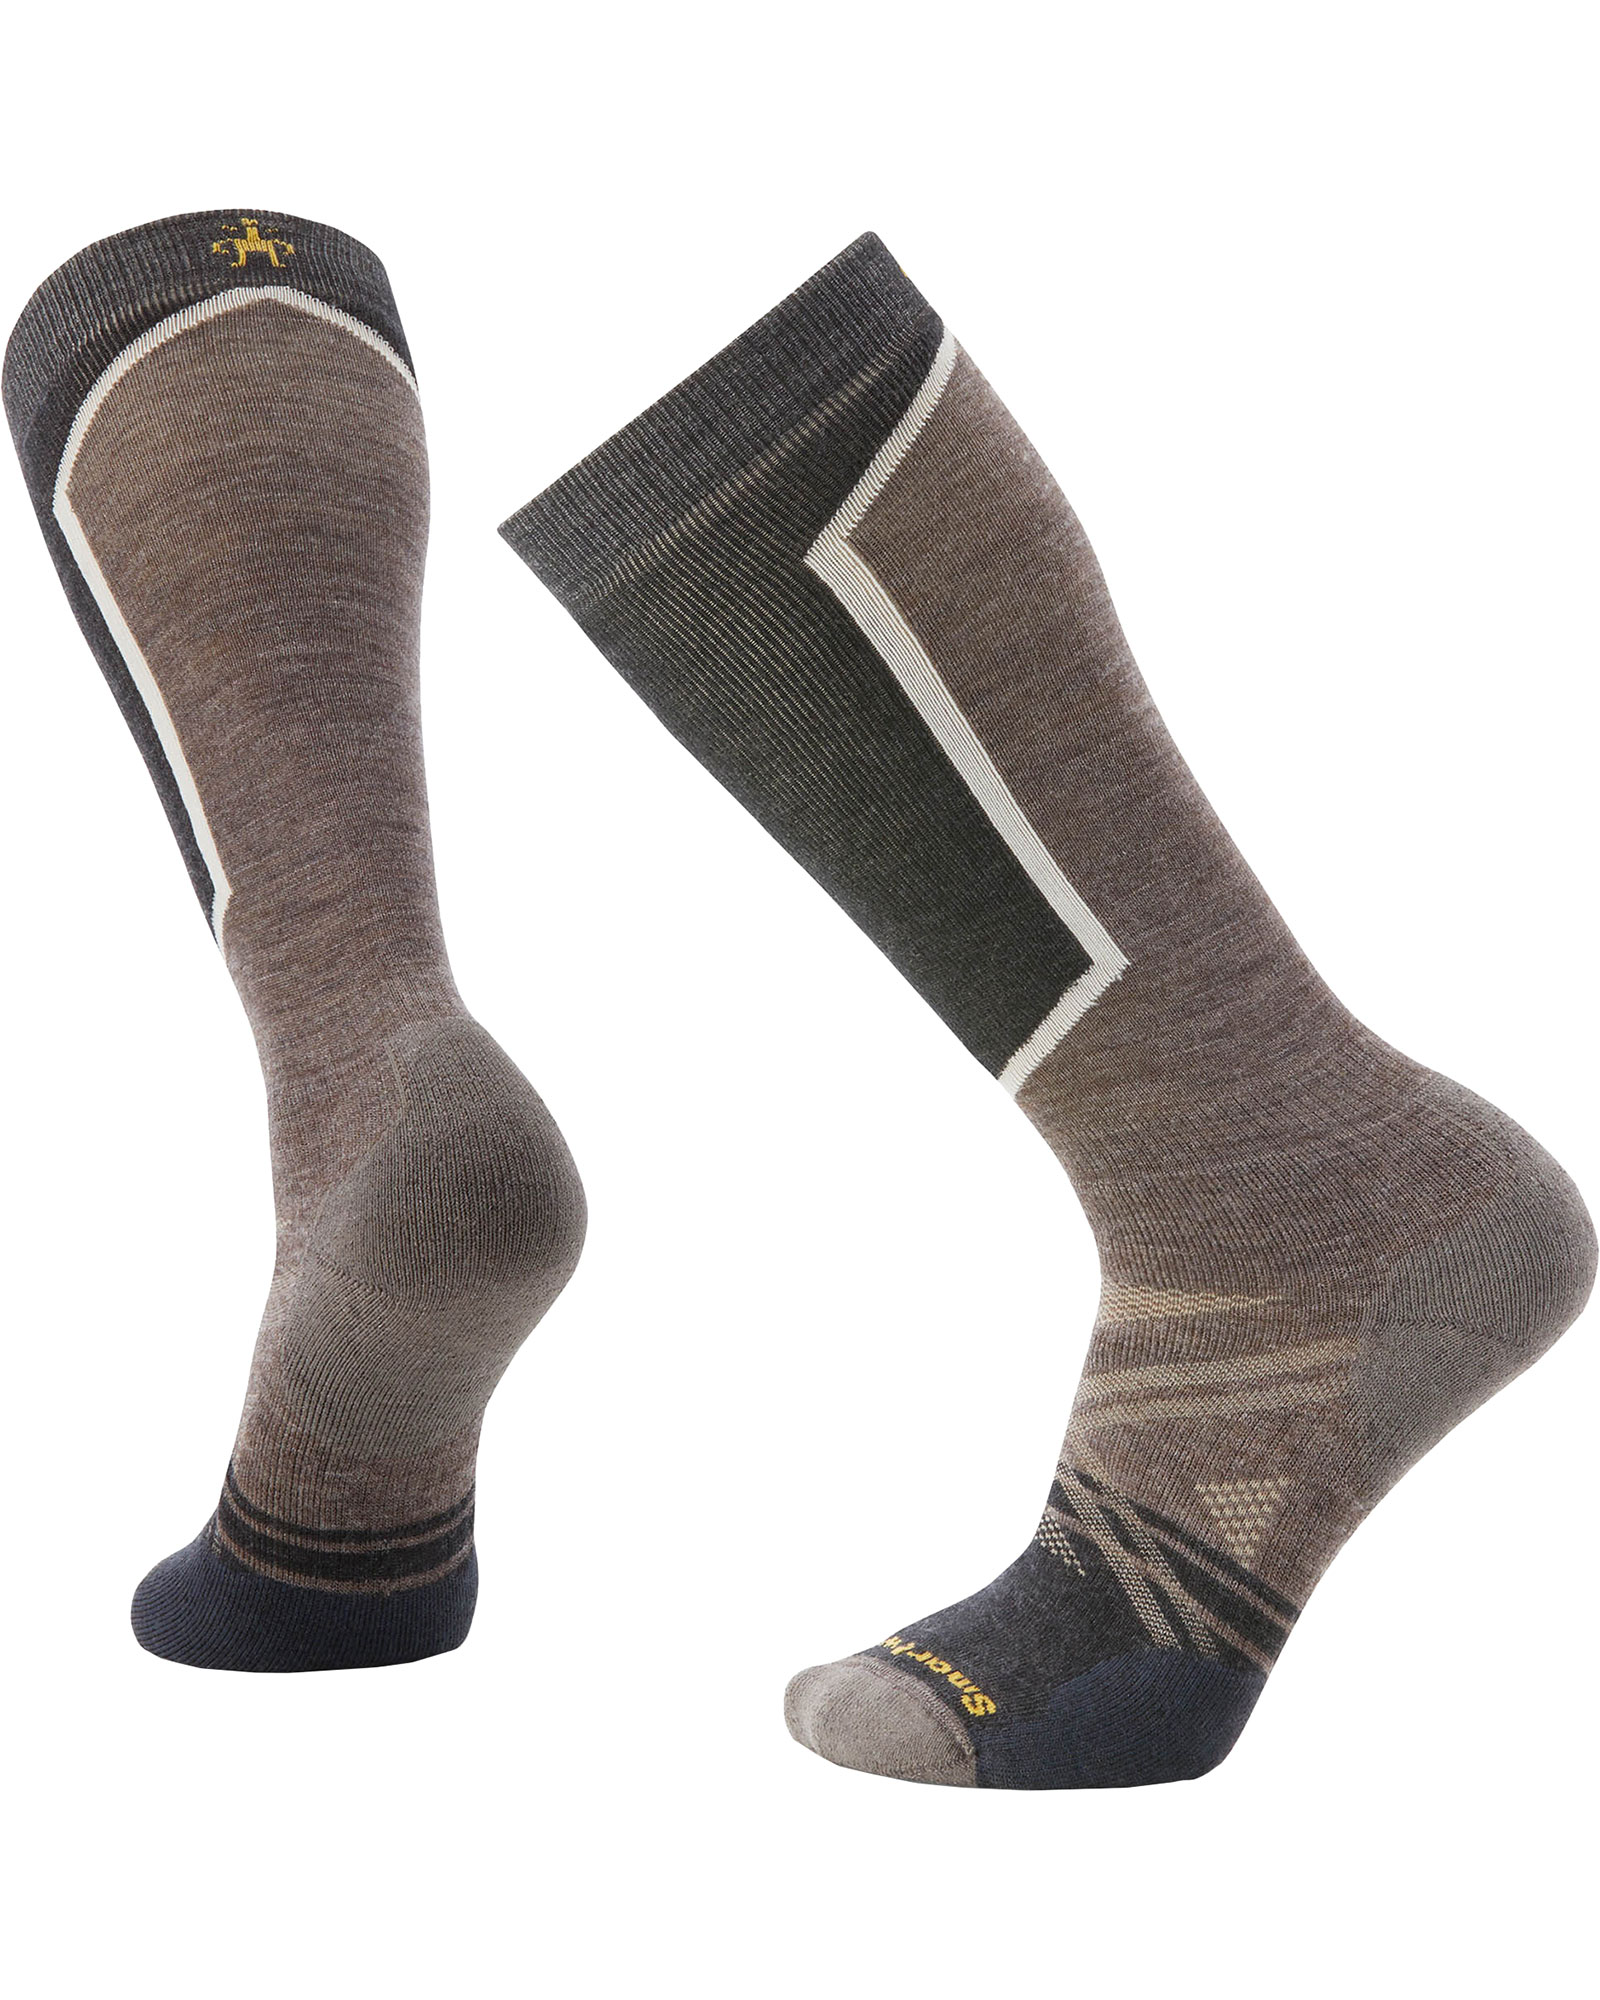 Smartwool Full Cushion Ski Socks - Taupe L